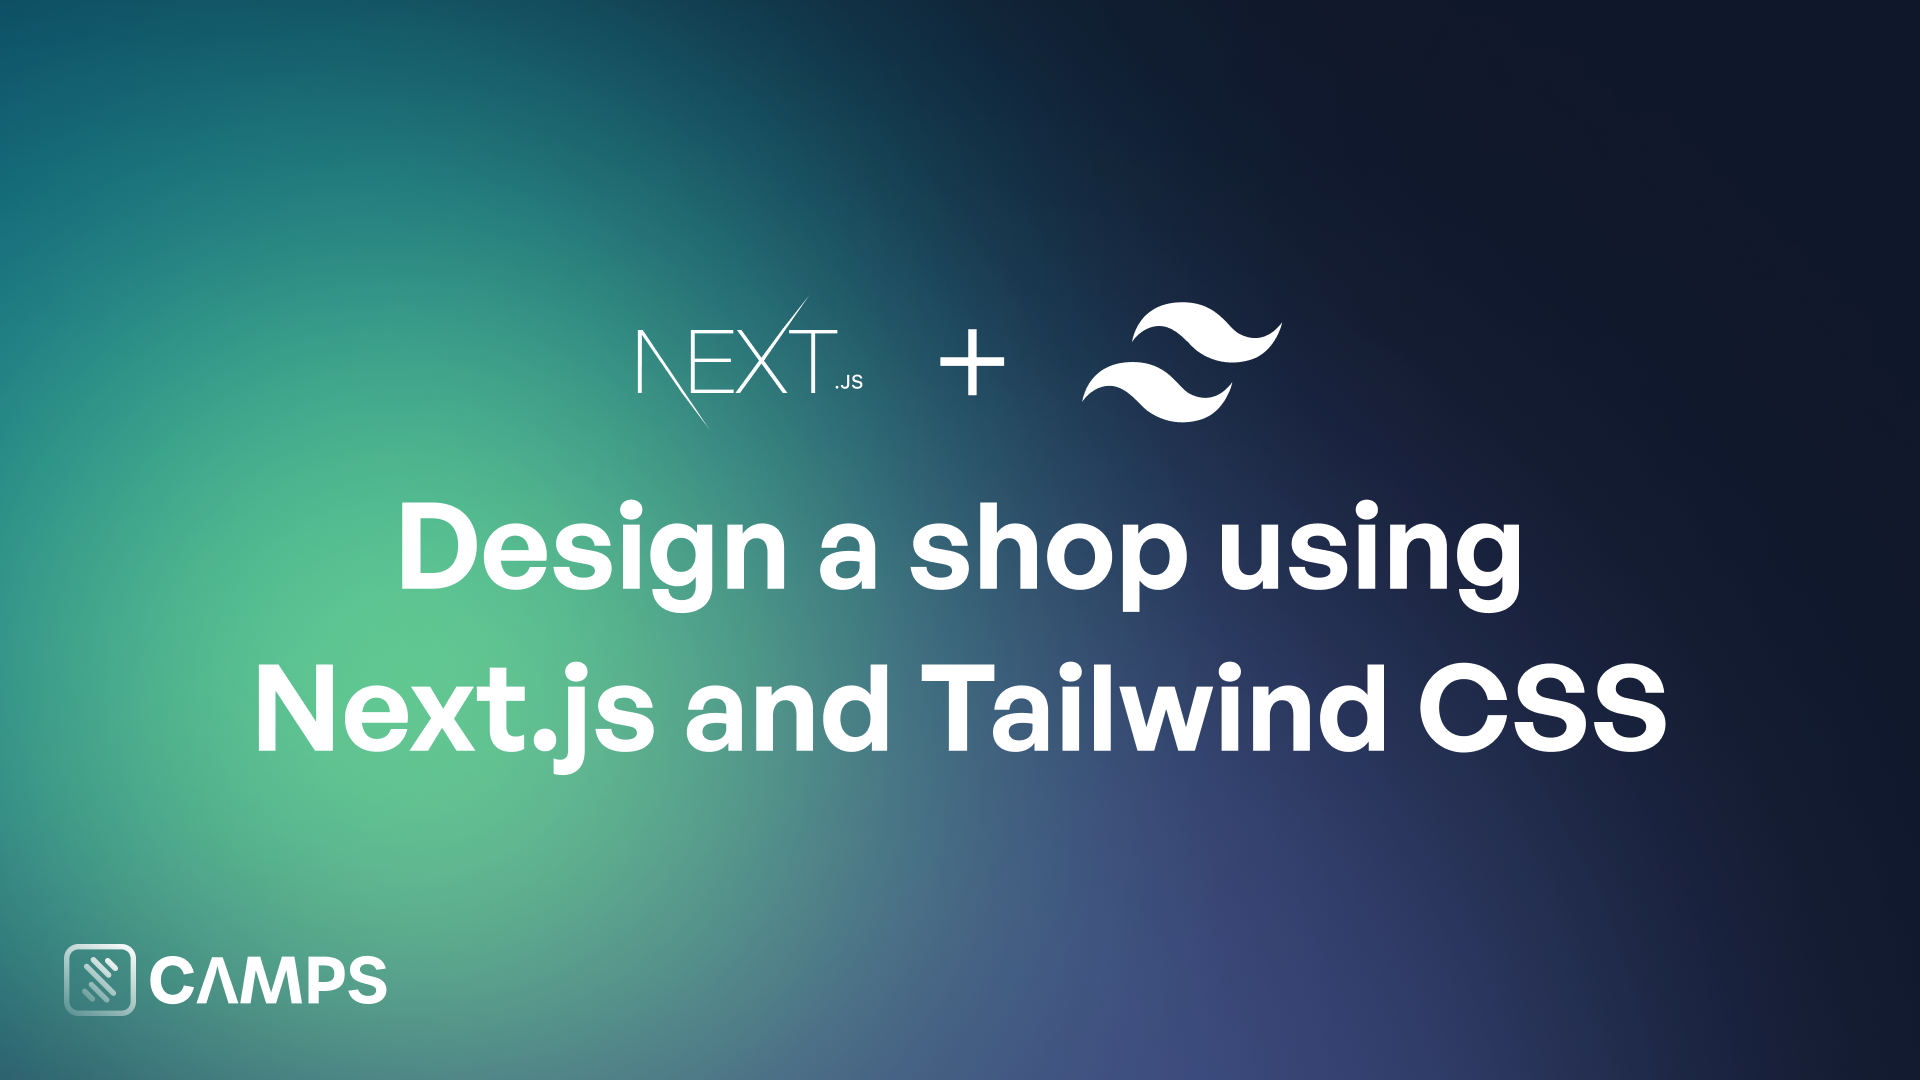 Design a shop using Next.js and Tailwind CSS